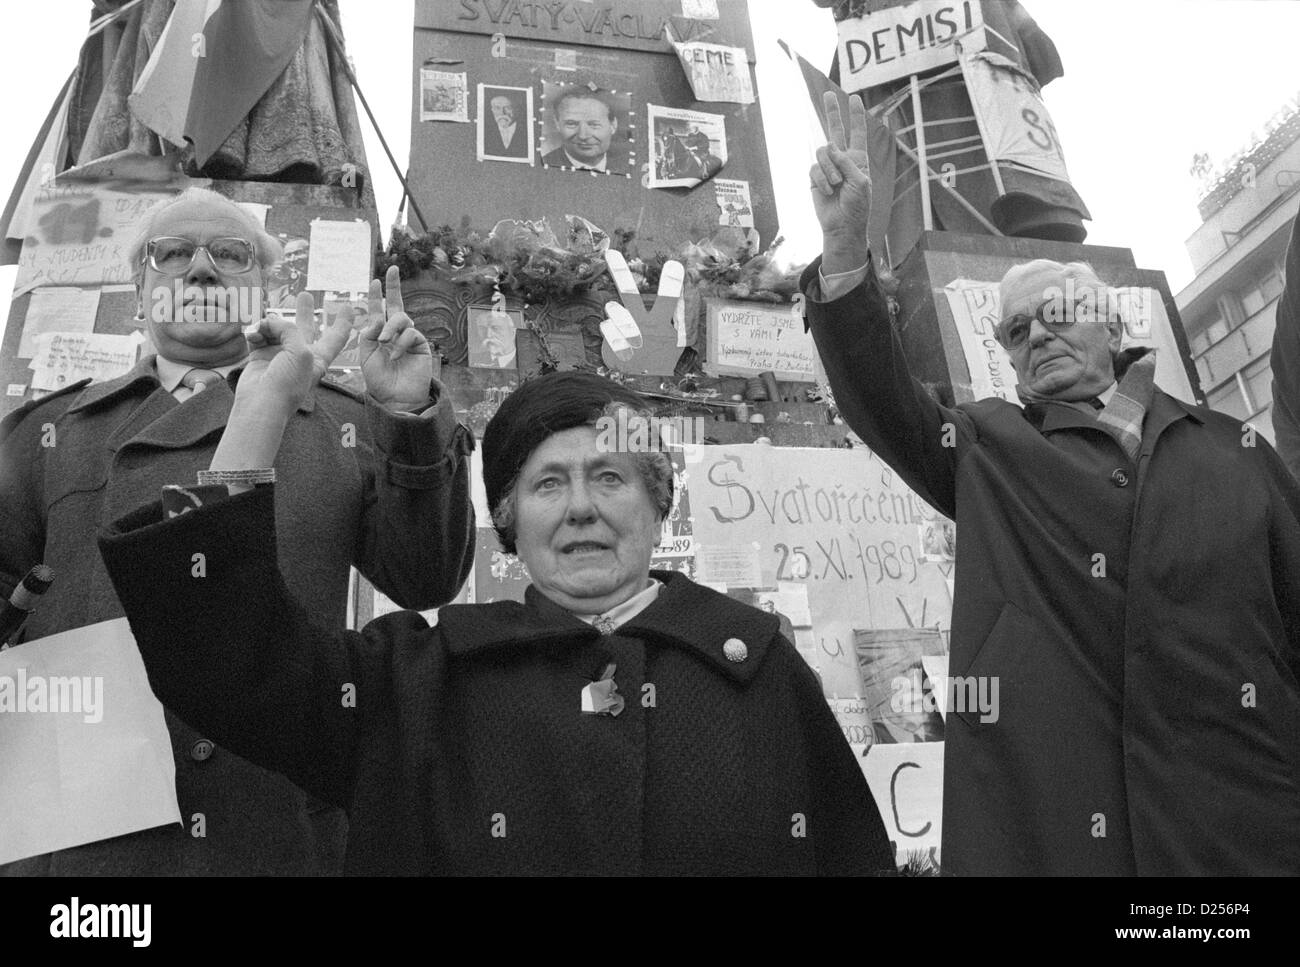 November 1989 Velvet Revolution.Veterans of the Prague Spring  pictured in Wenceslas Square during the fall of communism in 1989 Stock Photo